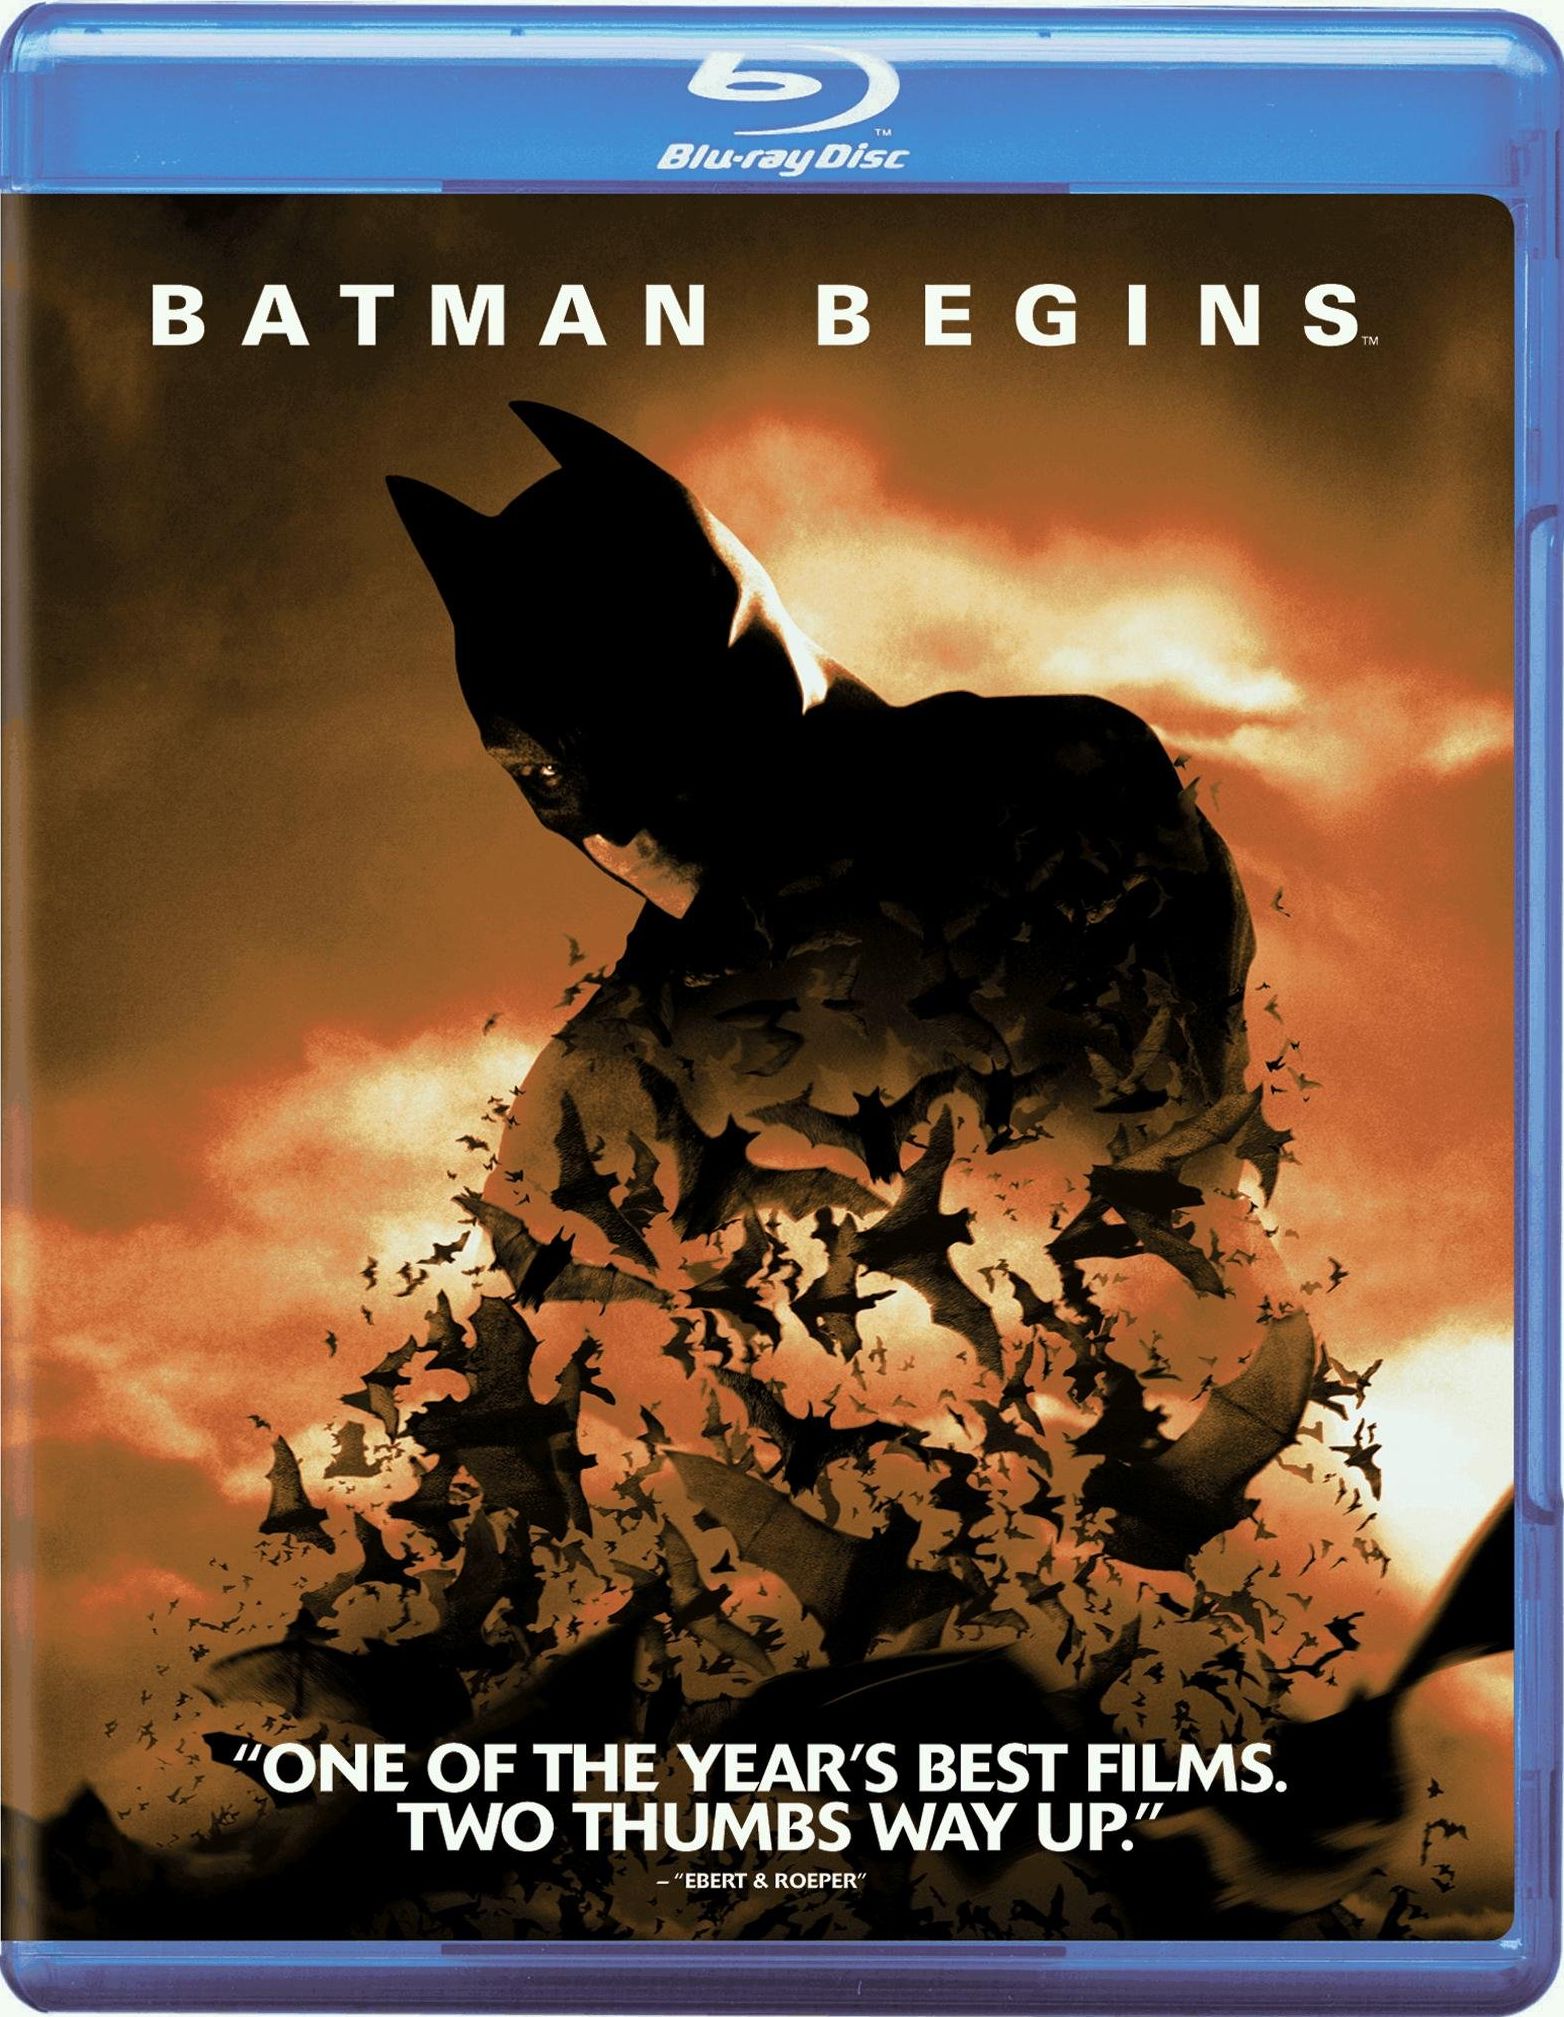 Batman Begins Home Video | DC Movies Wiki | FANDOM powered by Wikia